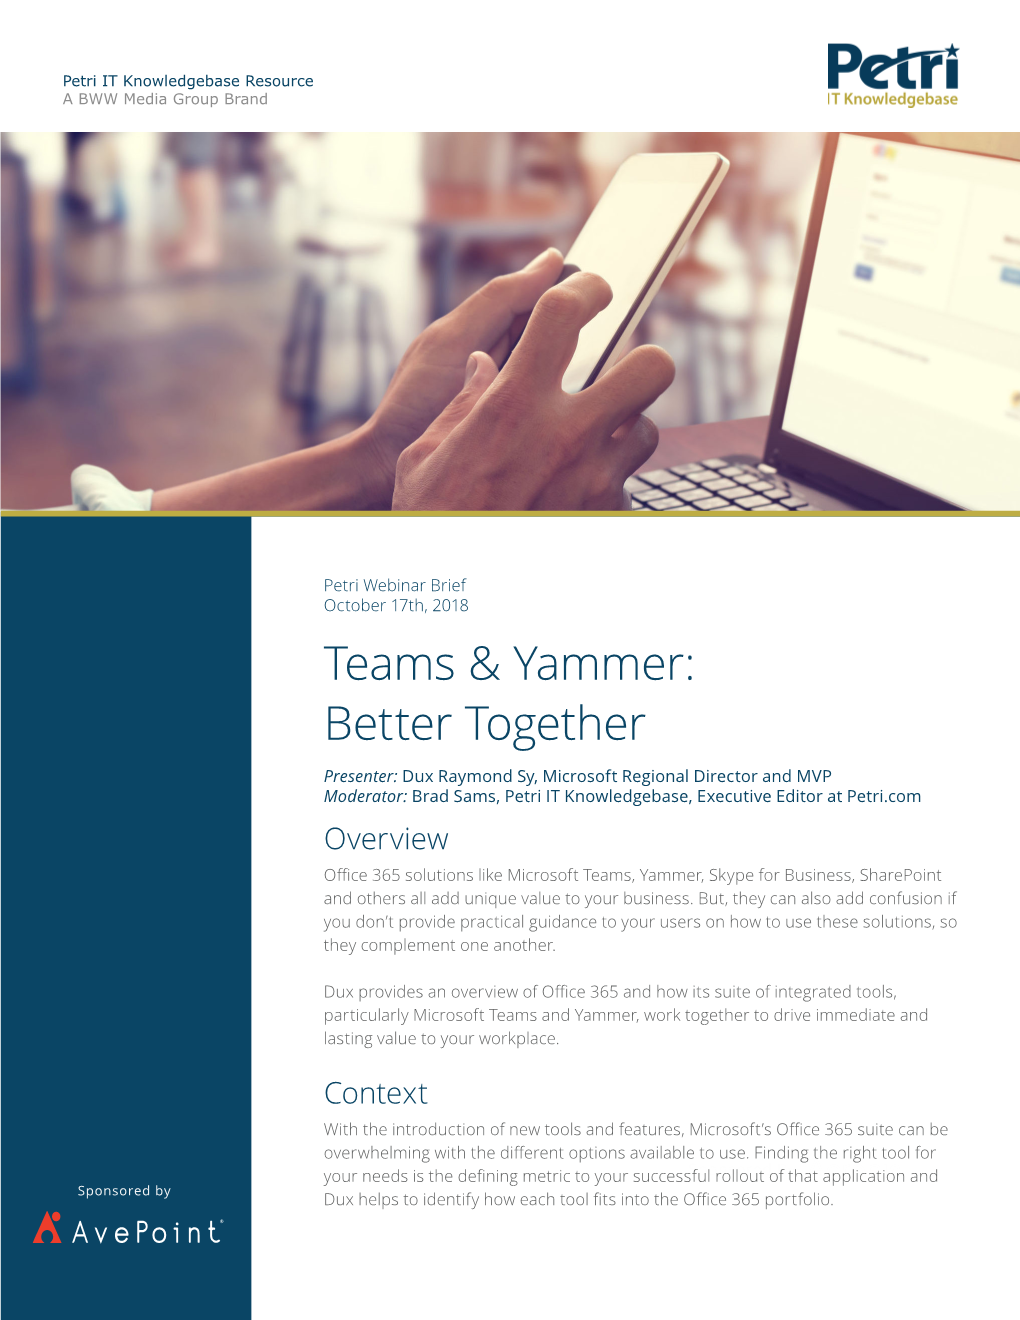 Teams & Yammer: Better Together